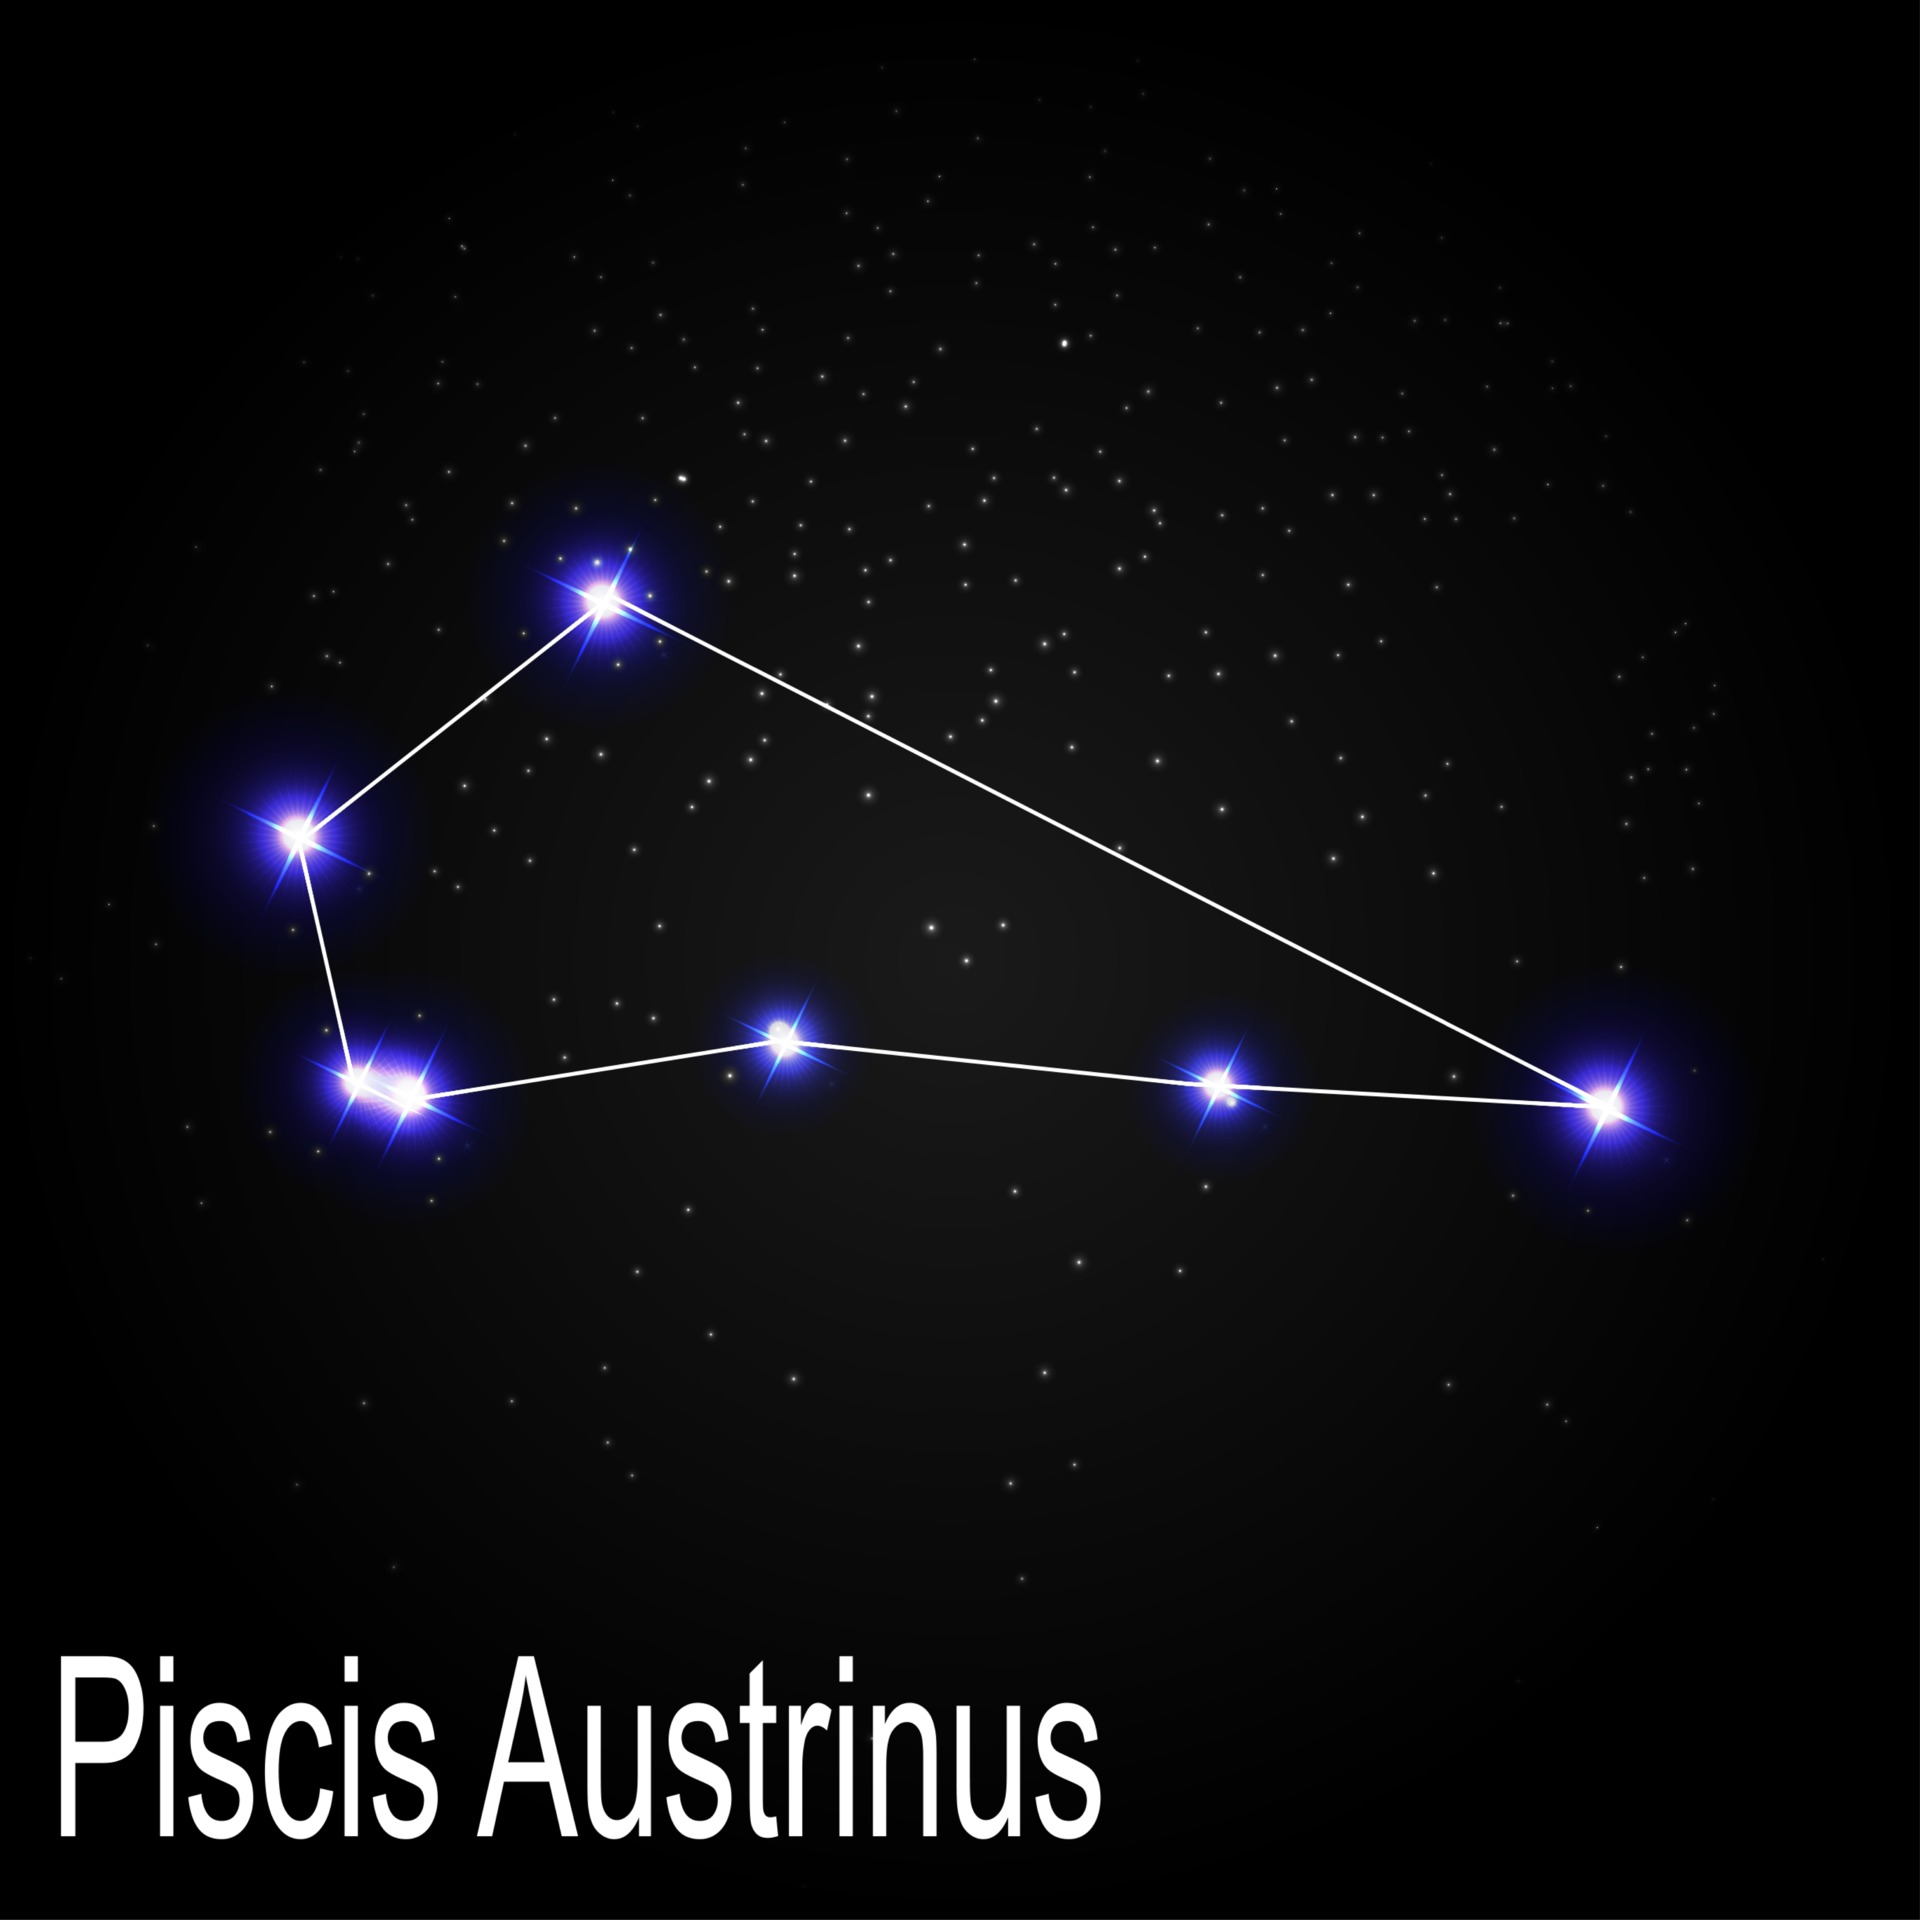 Созвездие 55. Piscis Austrinus Созвездие. Aus Созвездие. Созвездия арты Piscis_Austrinus. Старфилд Constellation эмблема.